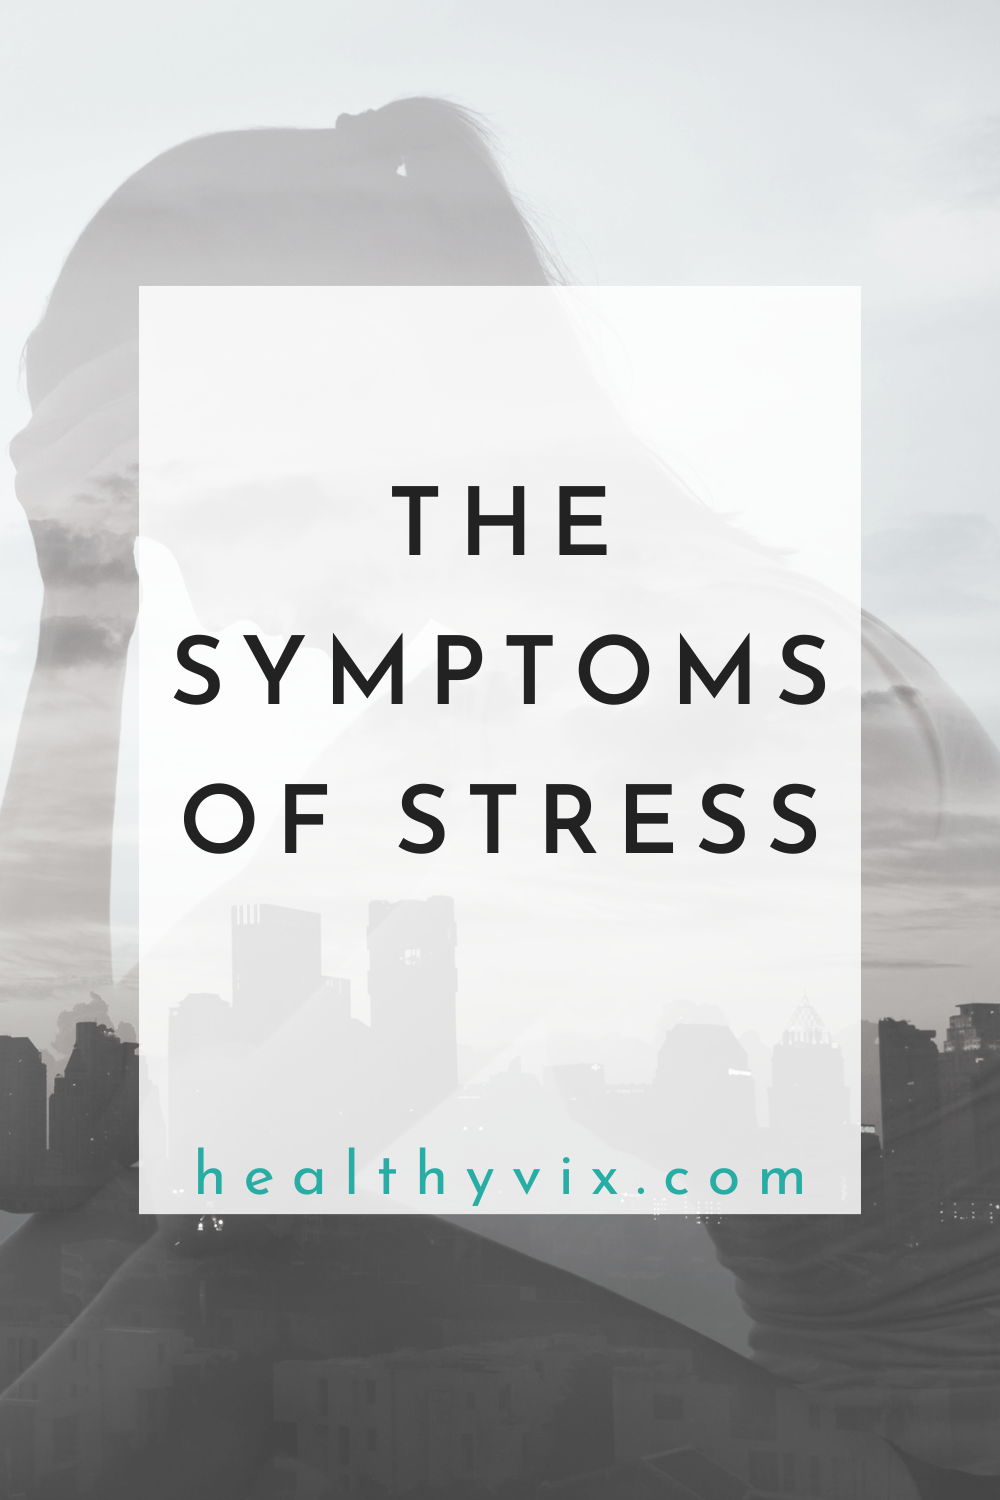 The symptoms of stress